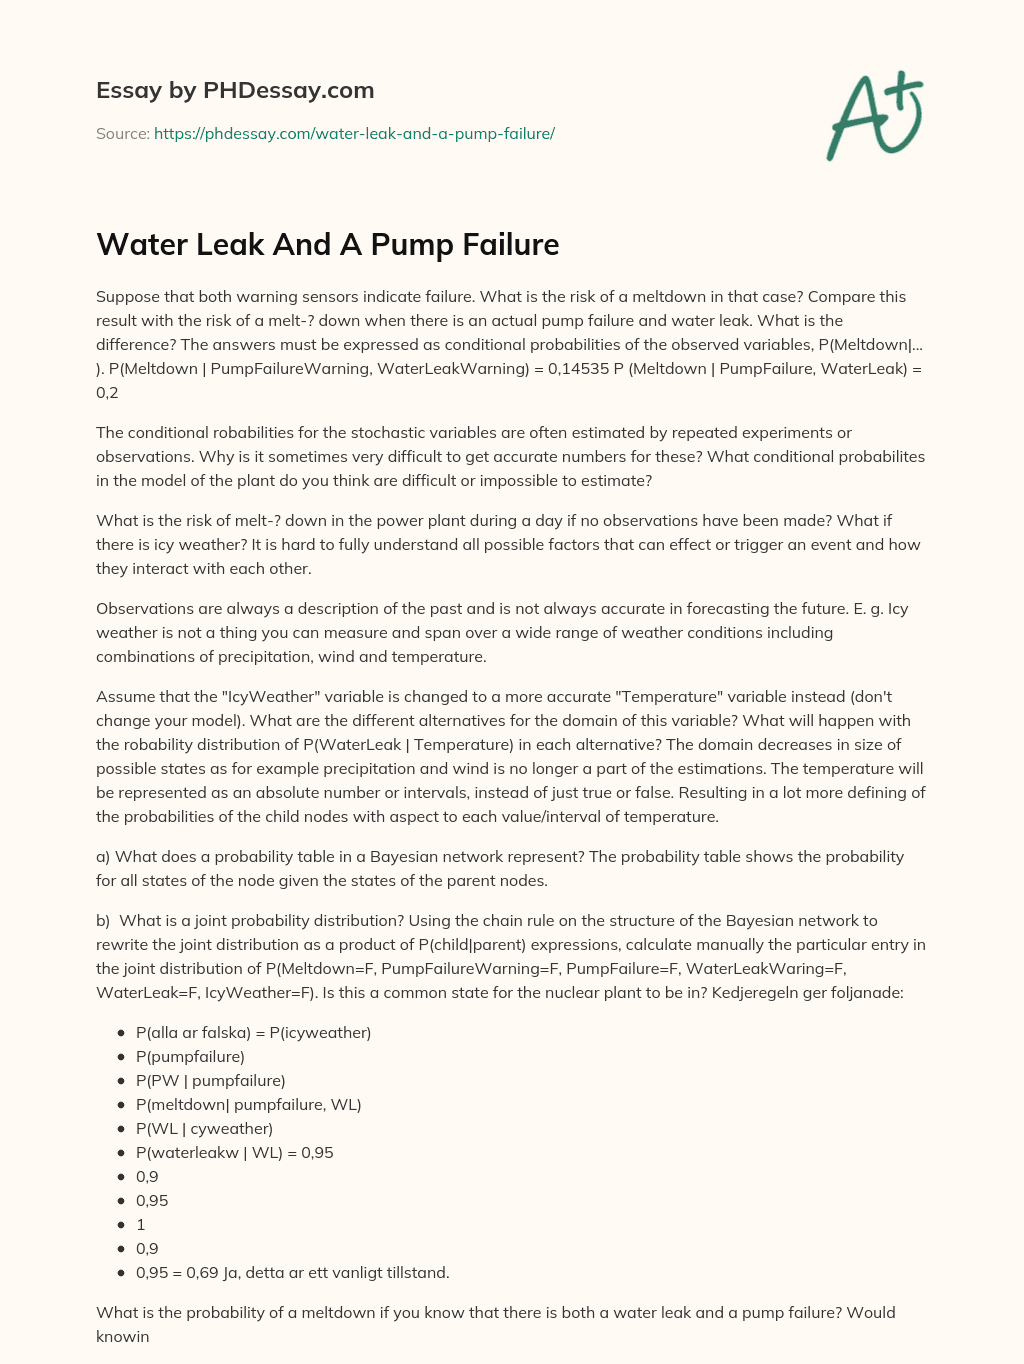 Water Leak And A Pump Failure essay